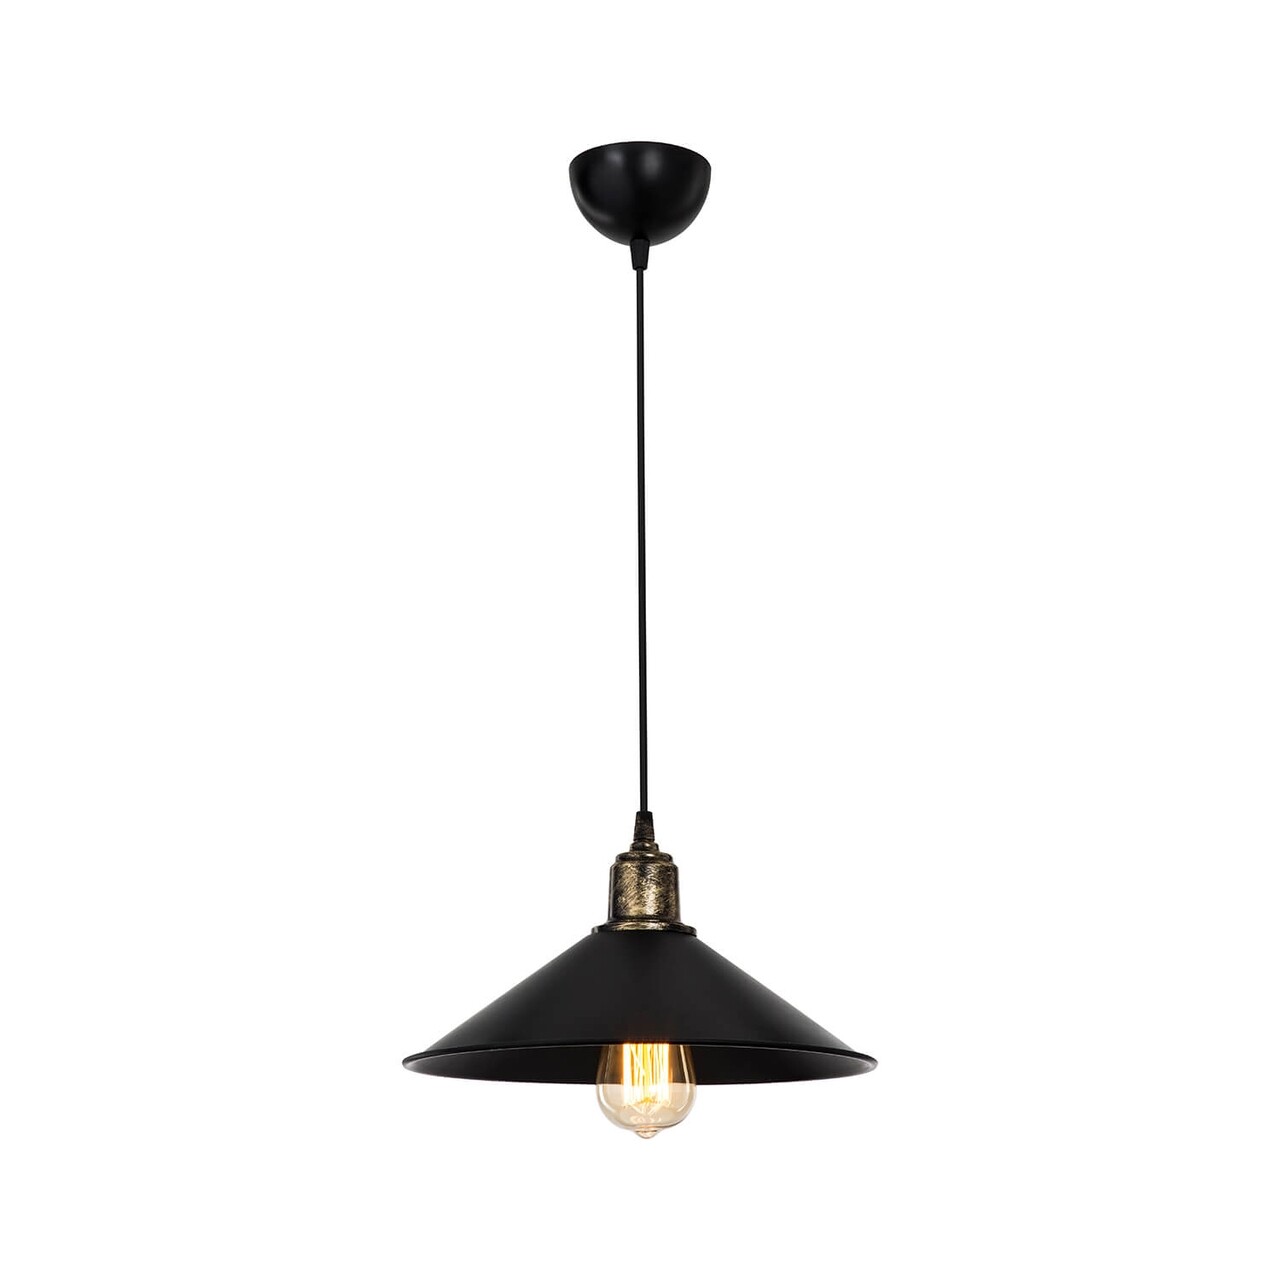 Siyah Antik csillár, MDL.4156, Squid Lighting, 30x62 cm, 60W, antik / fekete